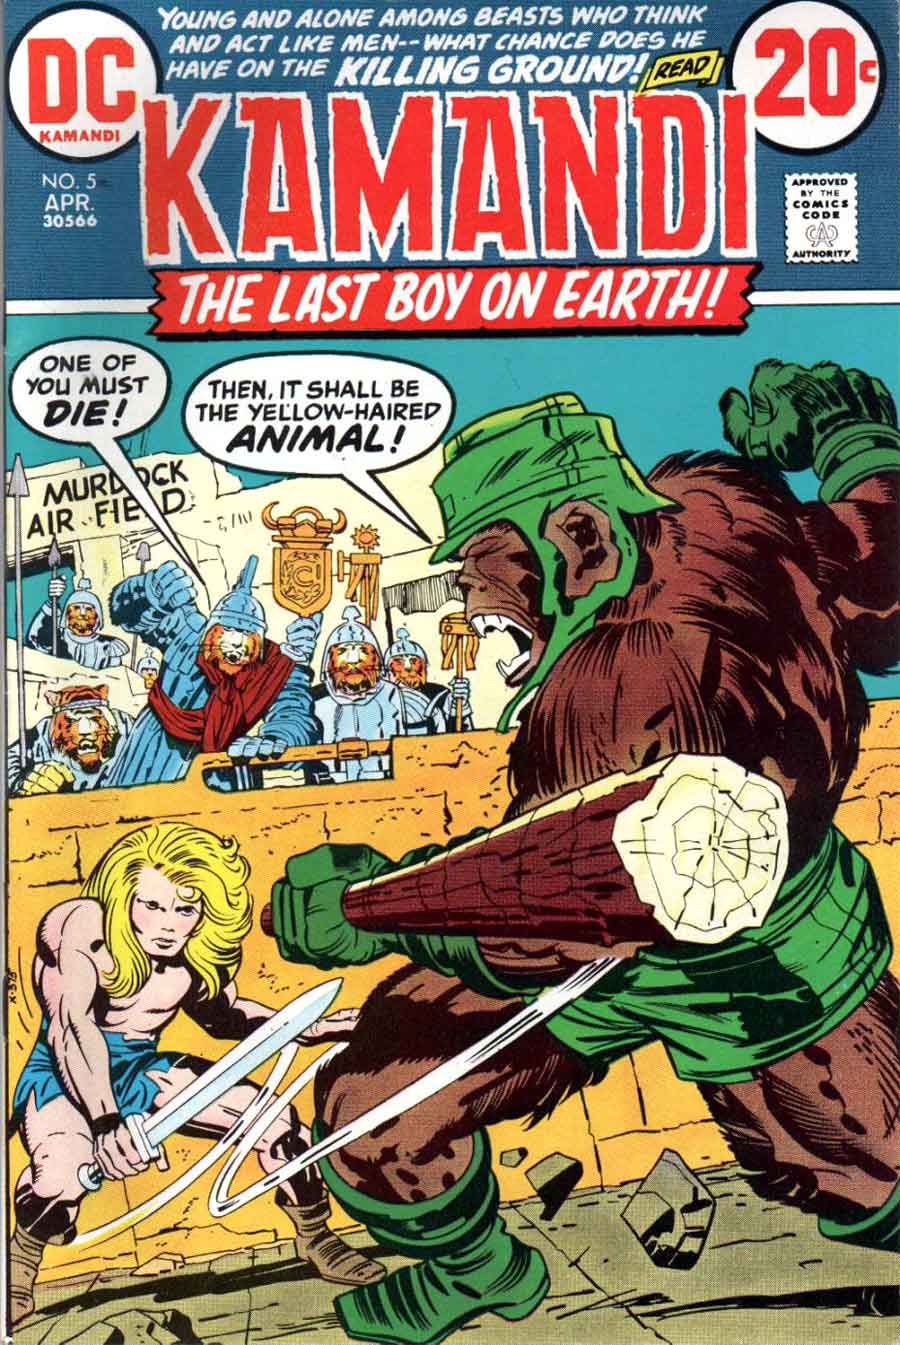 Kamandi v1 #5 dc 1970s bronze age comic book cover art by Jack Kirby